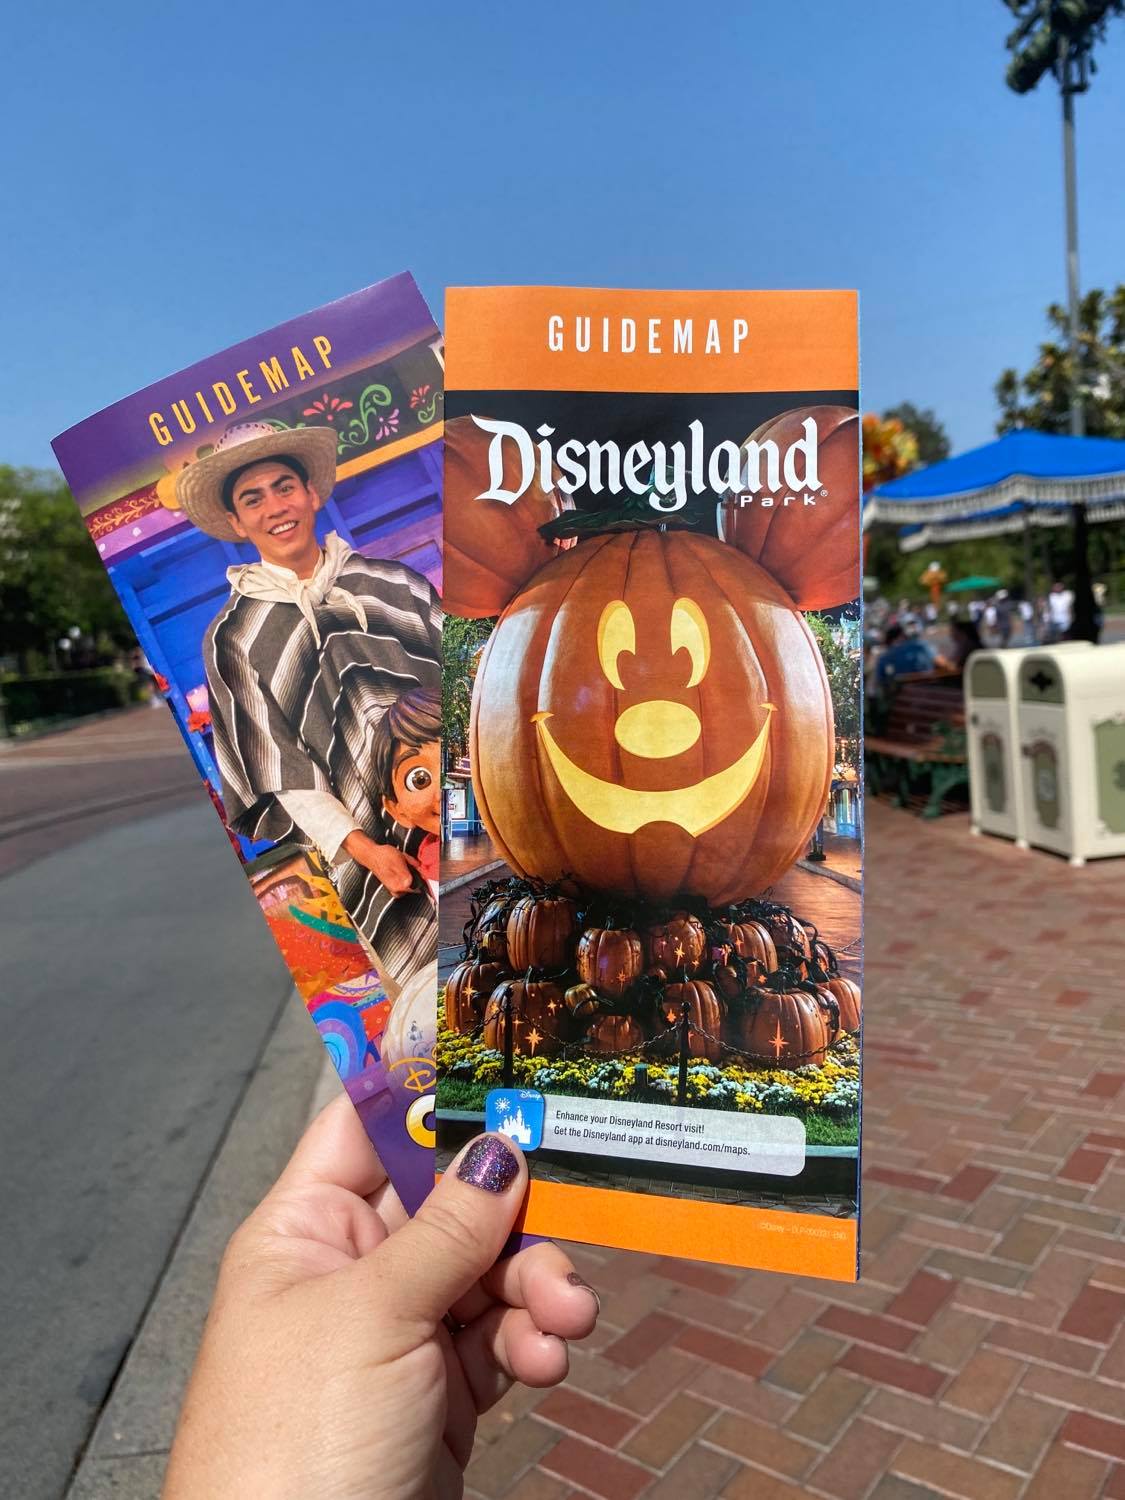 Hand holding a Disneyland Halloween map